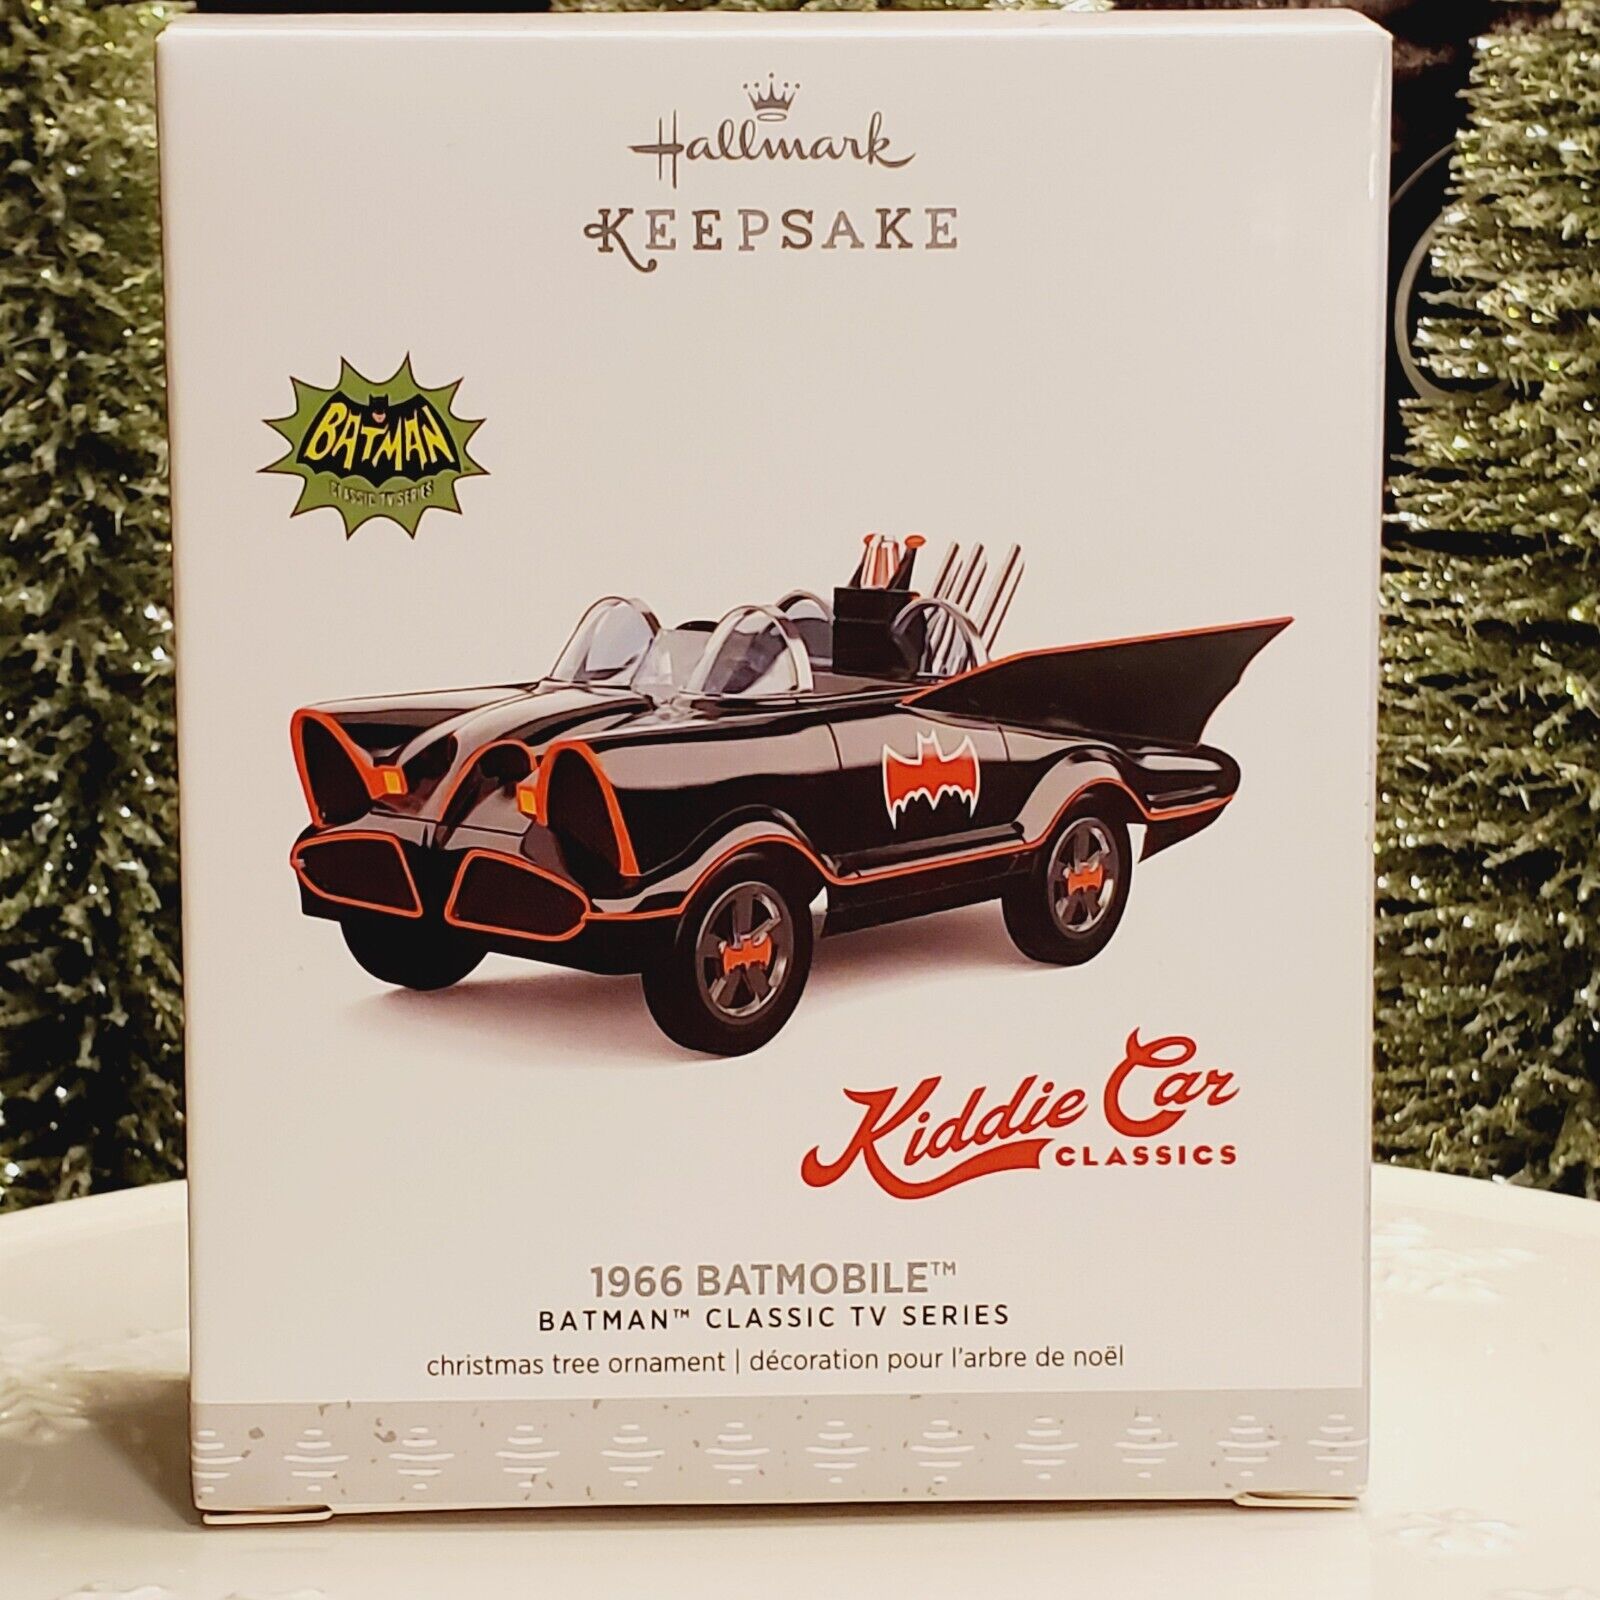 Hallmark Ornament-Kiddie Car Classics-1966 Batmobile-Black Ed-NIB-Mint Con-Rare